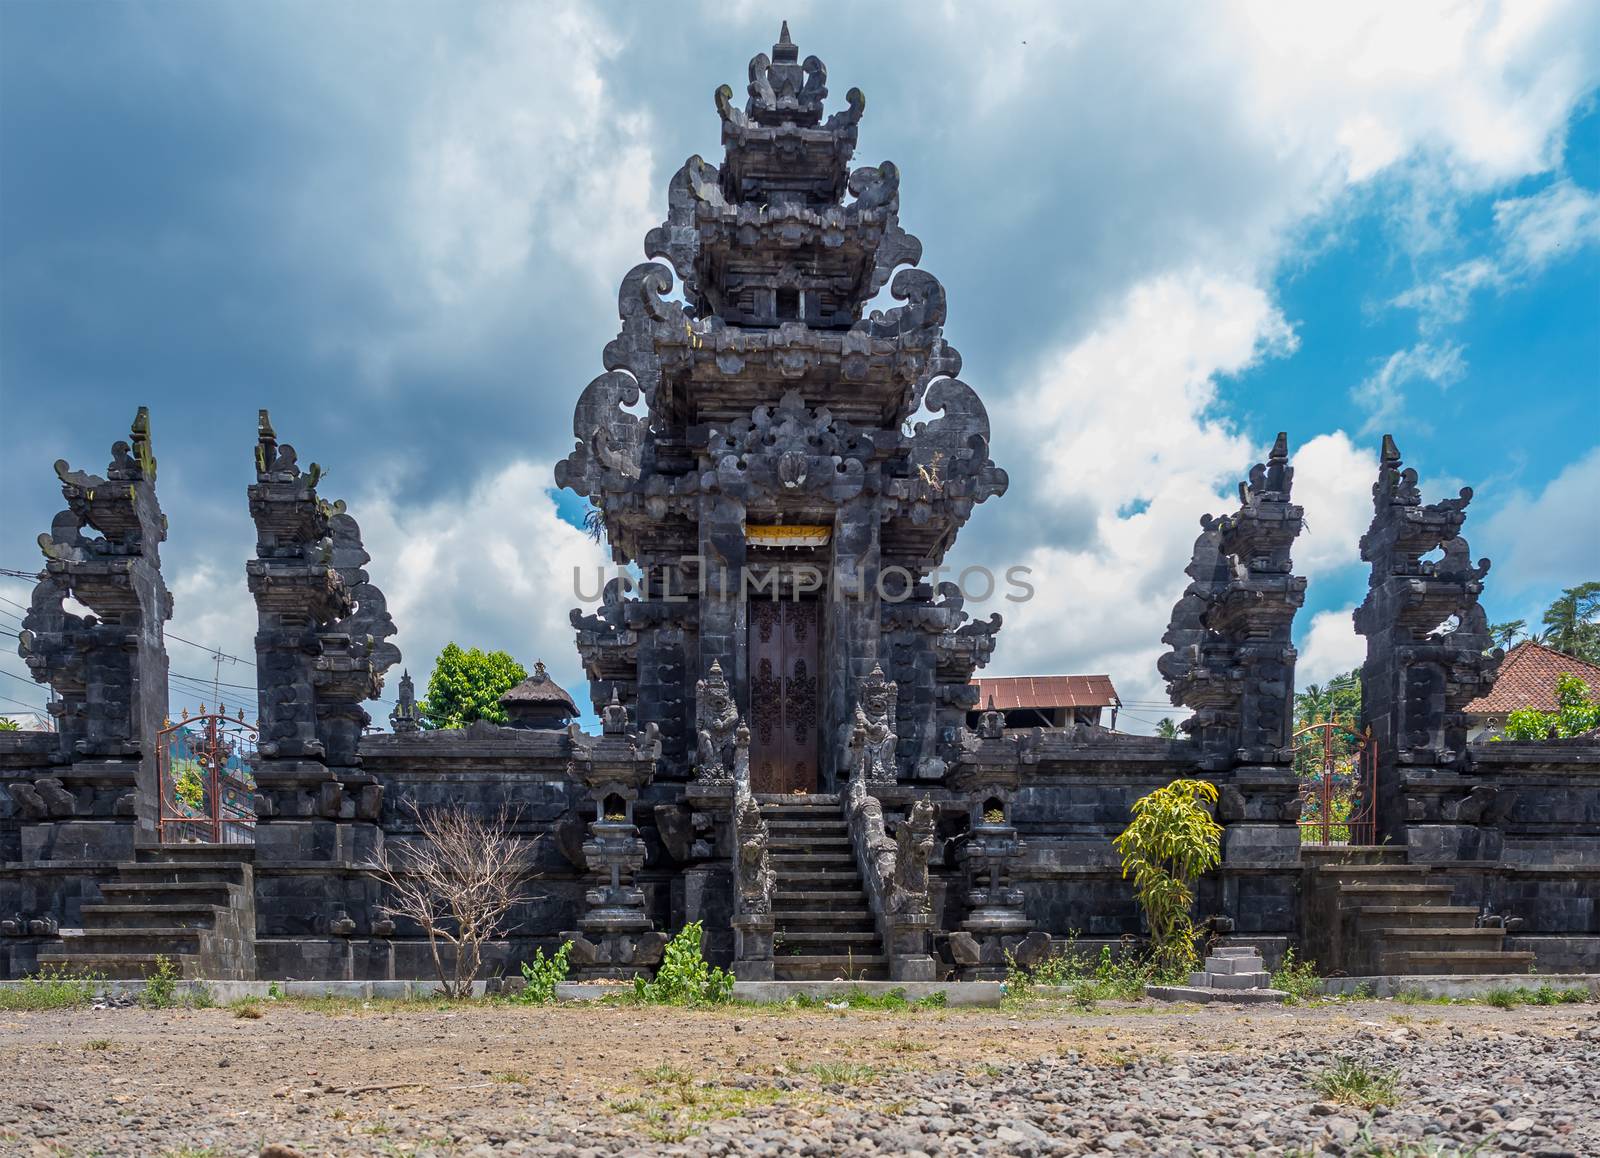 Traditional big gate entrance to temple. Bali Hindu temple. Bali island Indonesia.